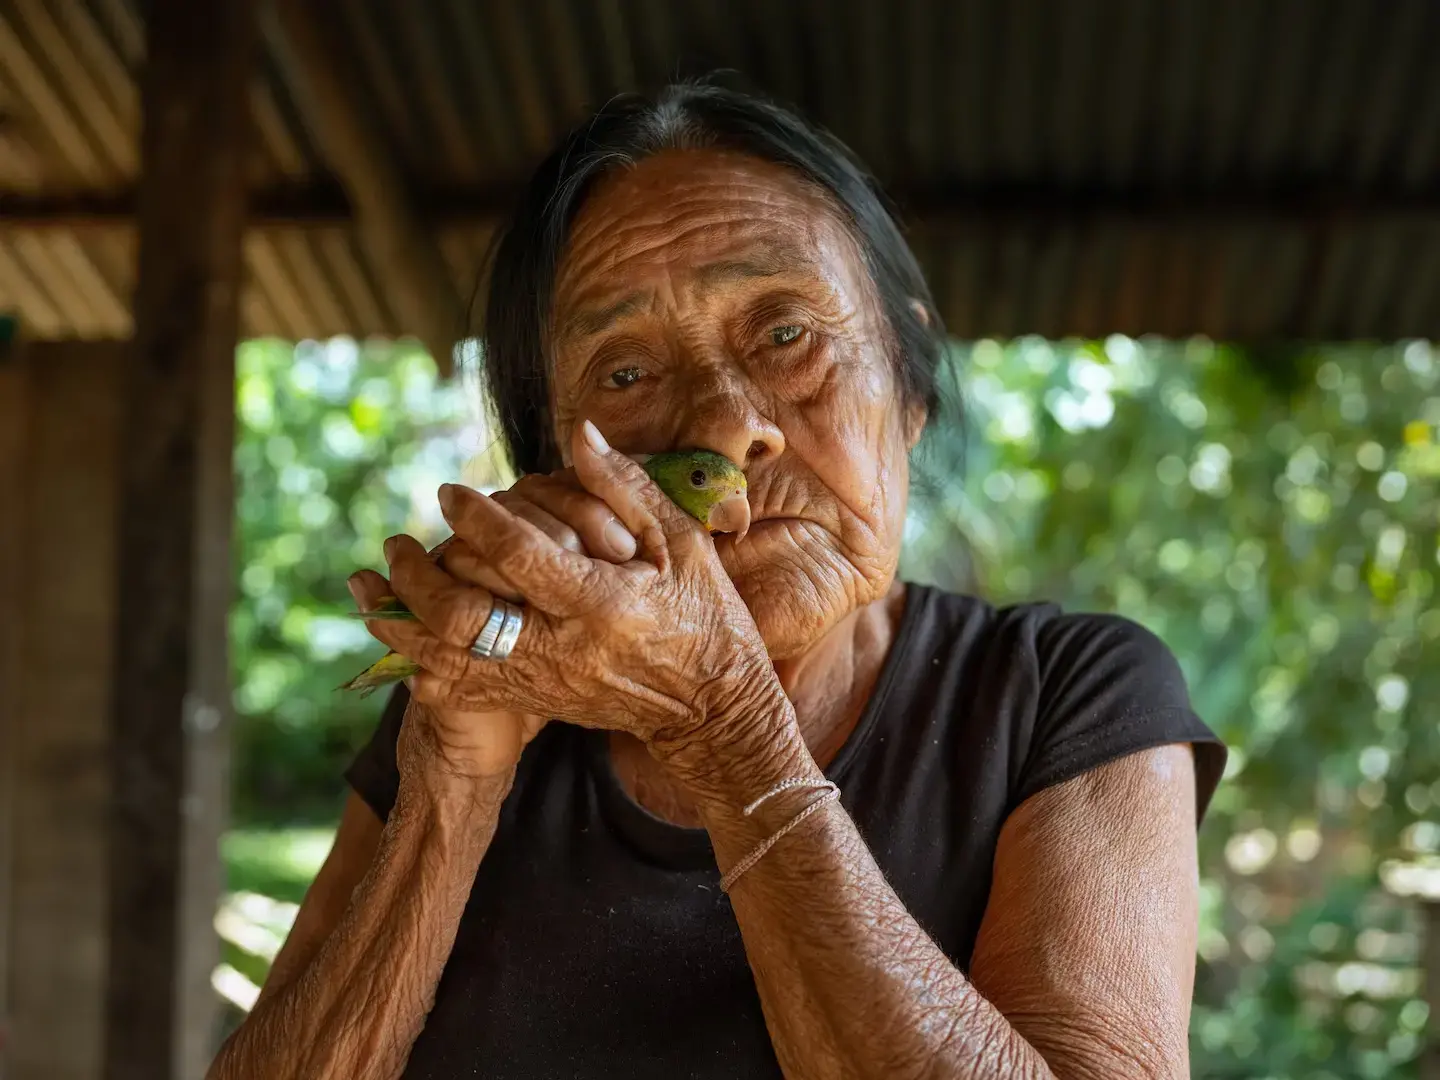 An elderly woman stands holding a green bird close to her face